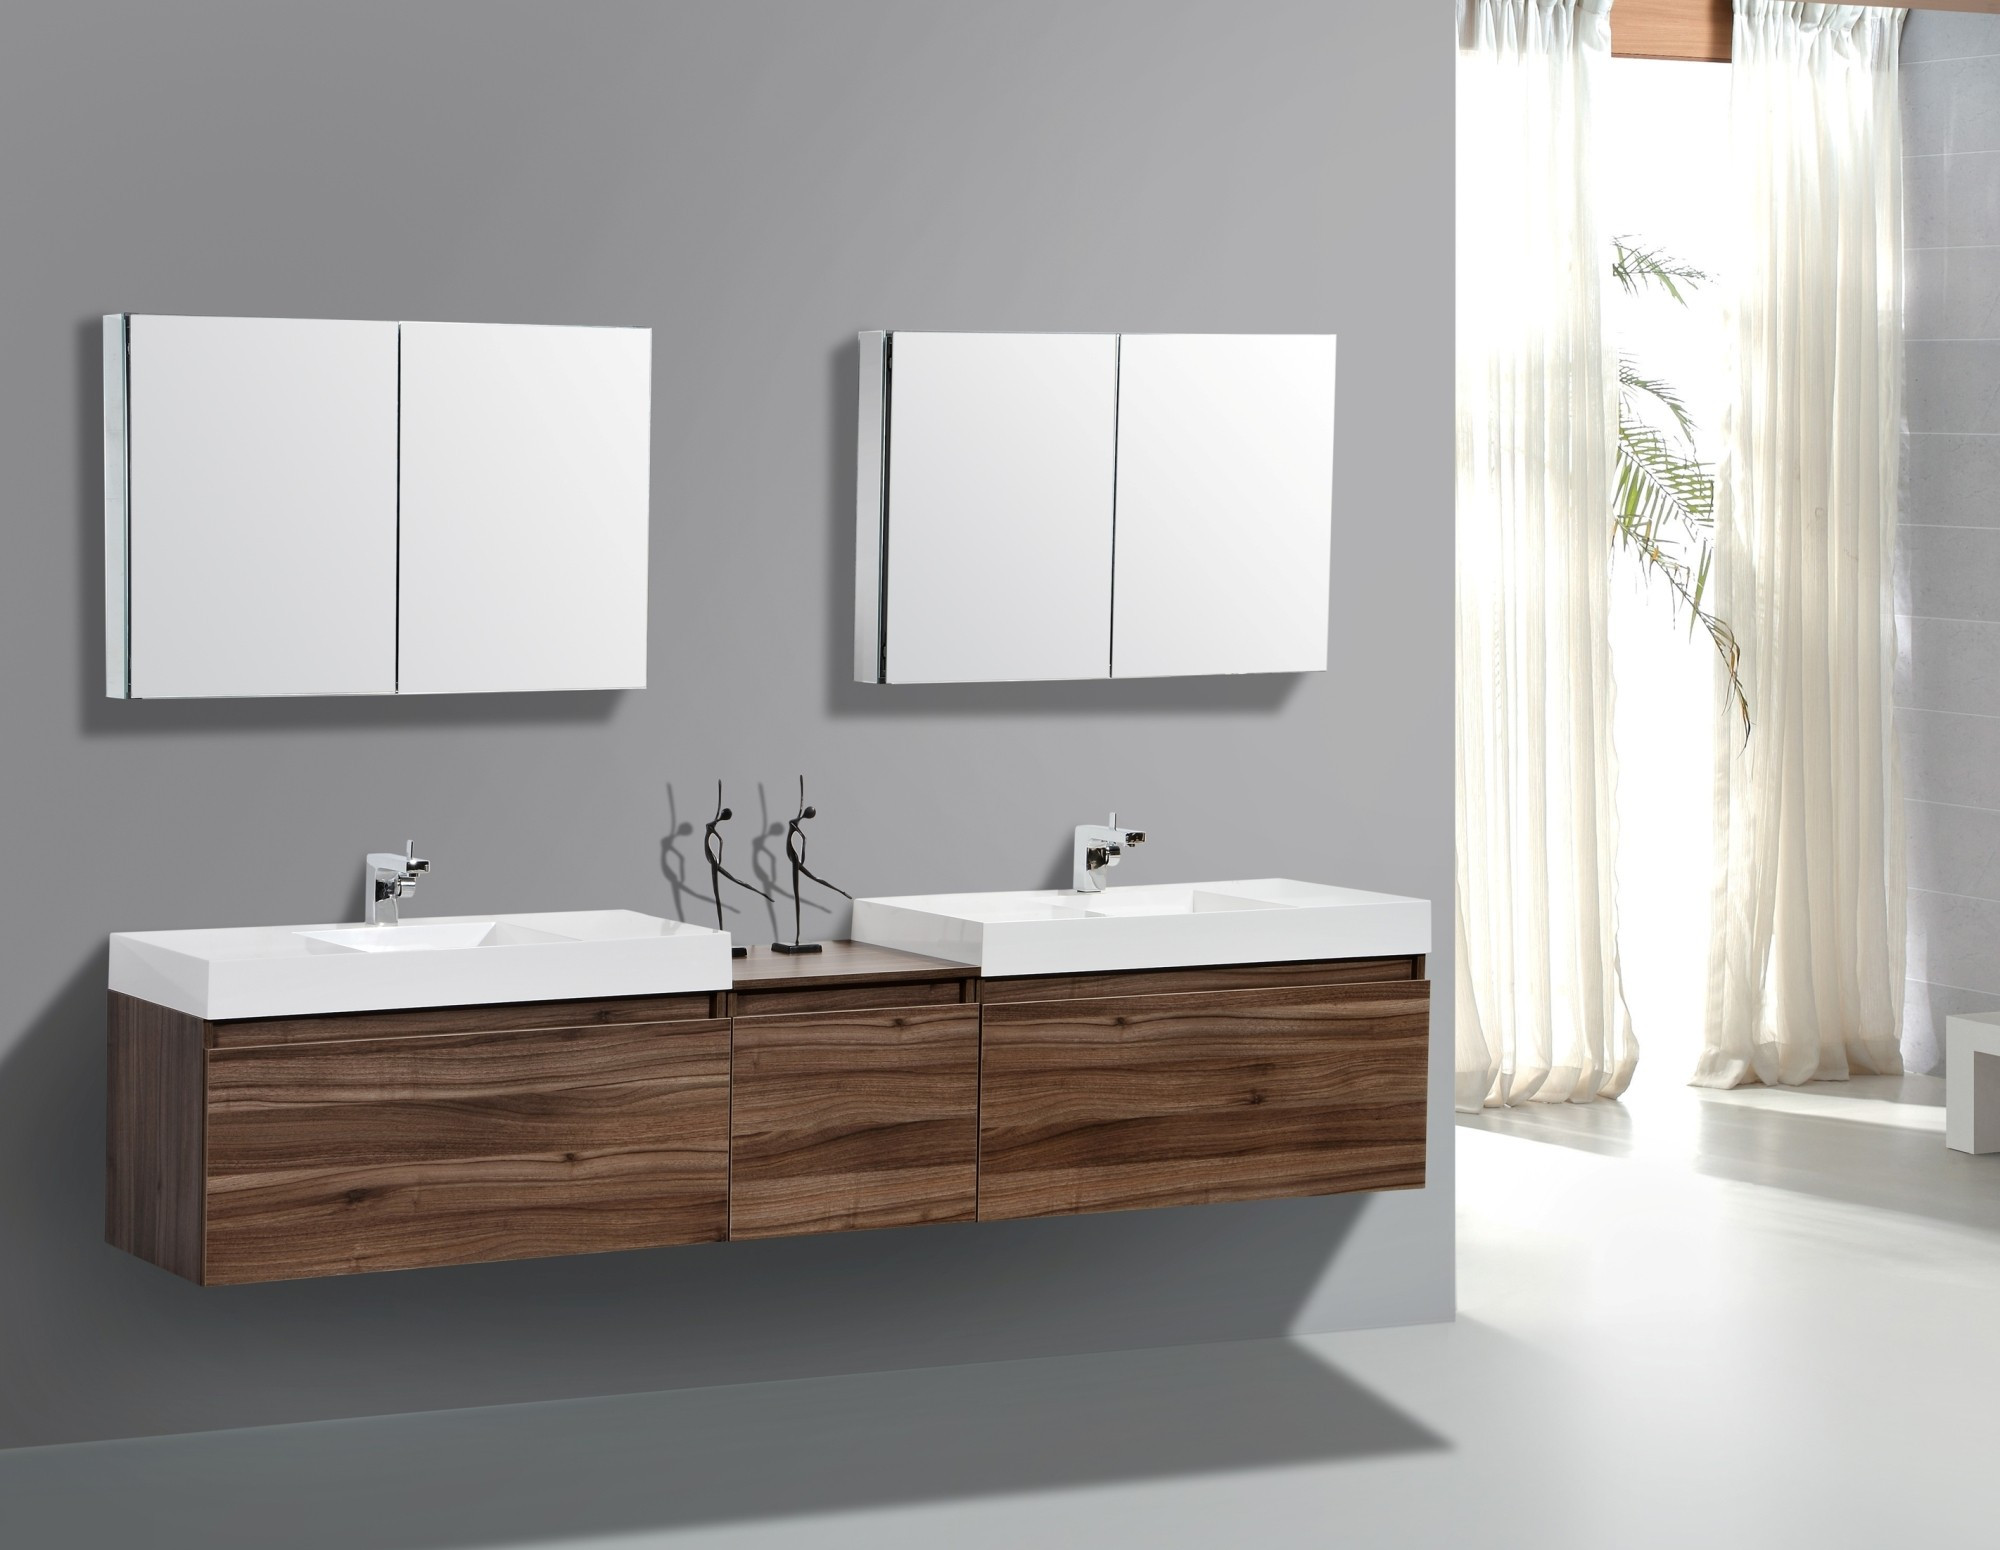 Bathroom Double Vanity Cabinets
 Double Sink Vanity Application for Spacious Bathroom